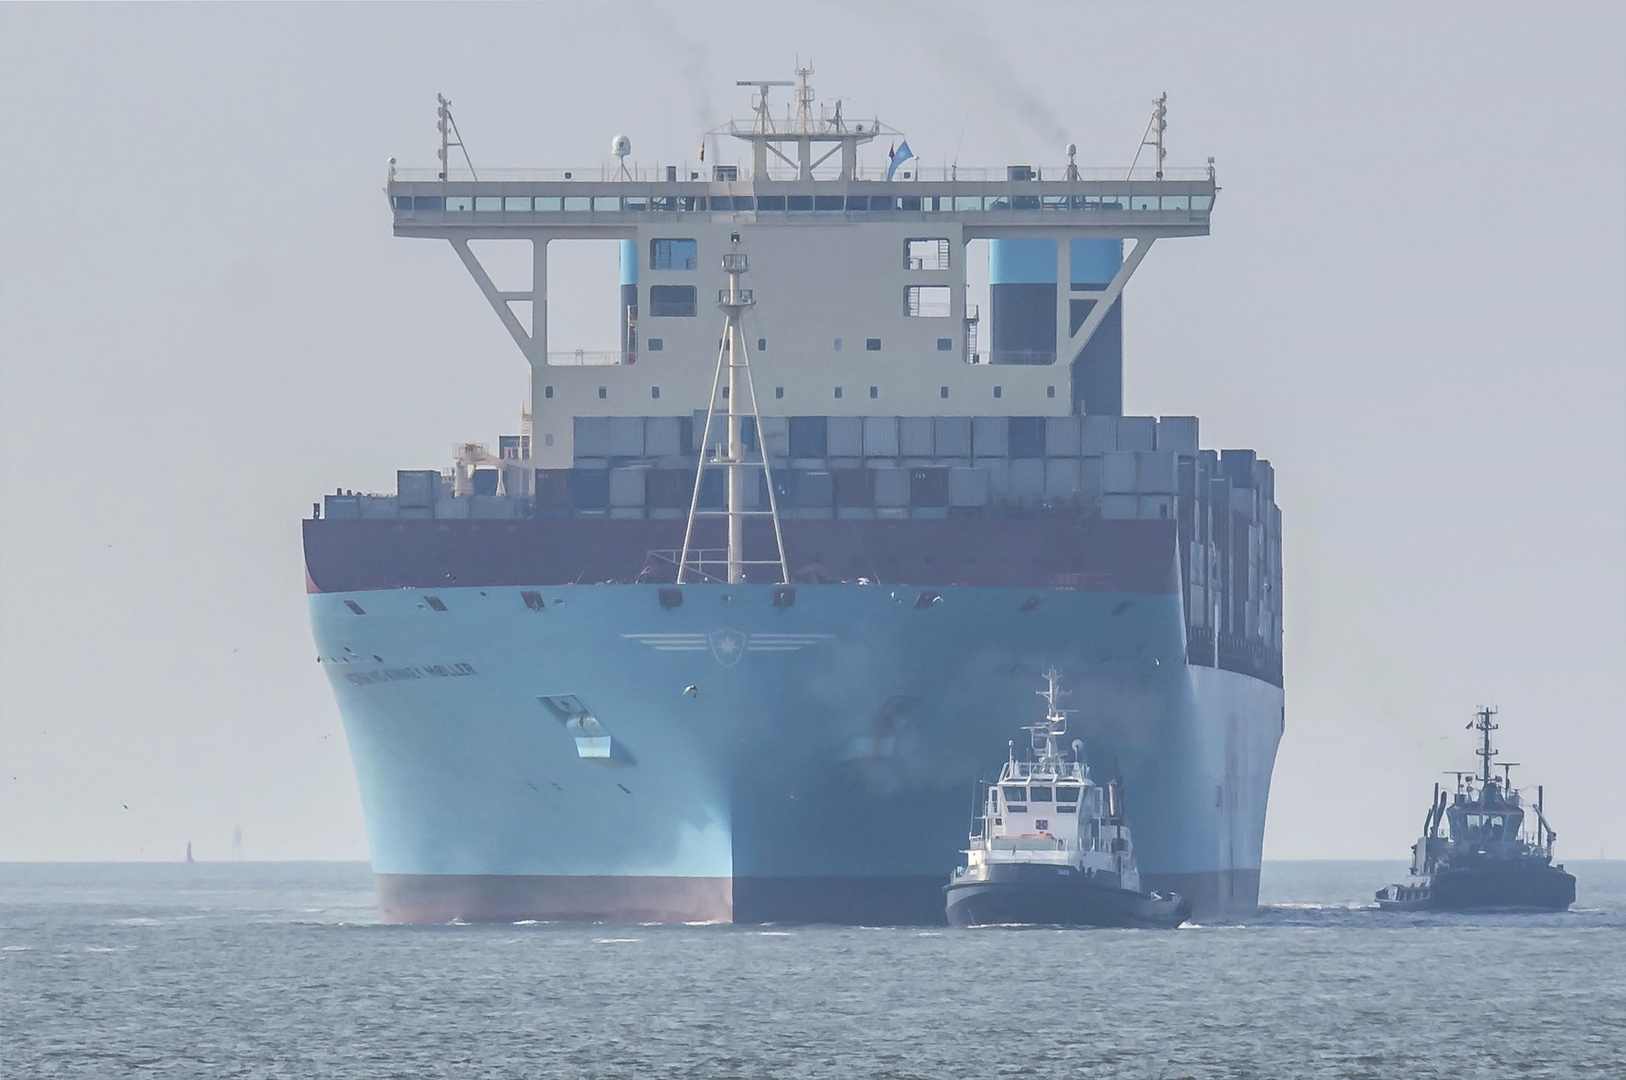 Maersk Mc-Kinney Möller am Haken